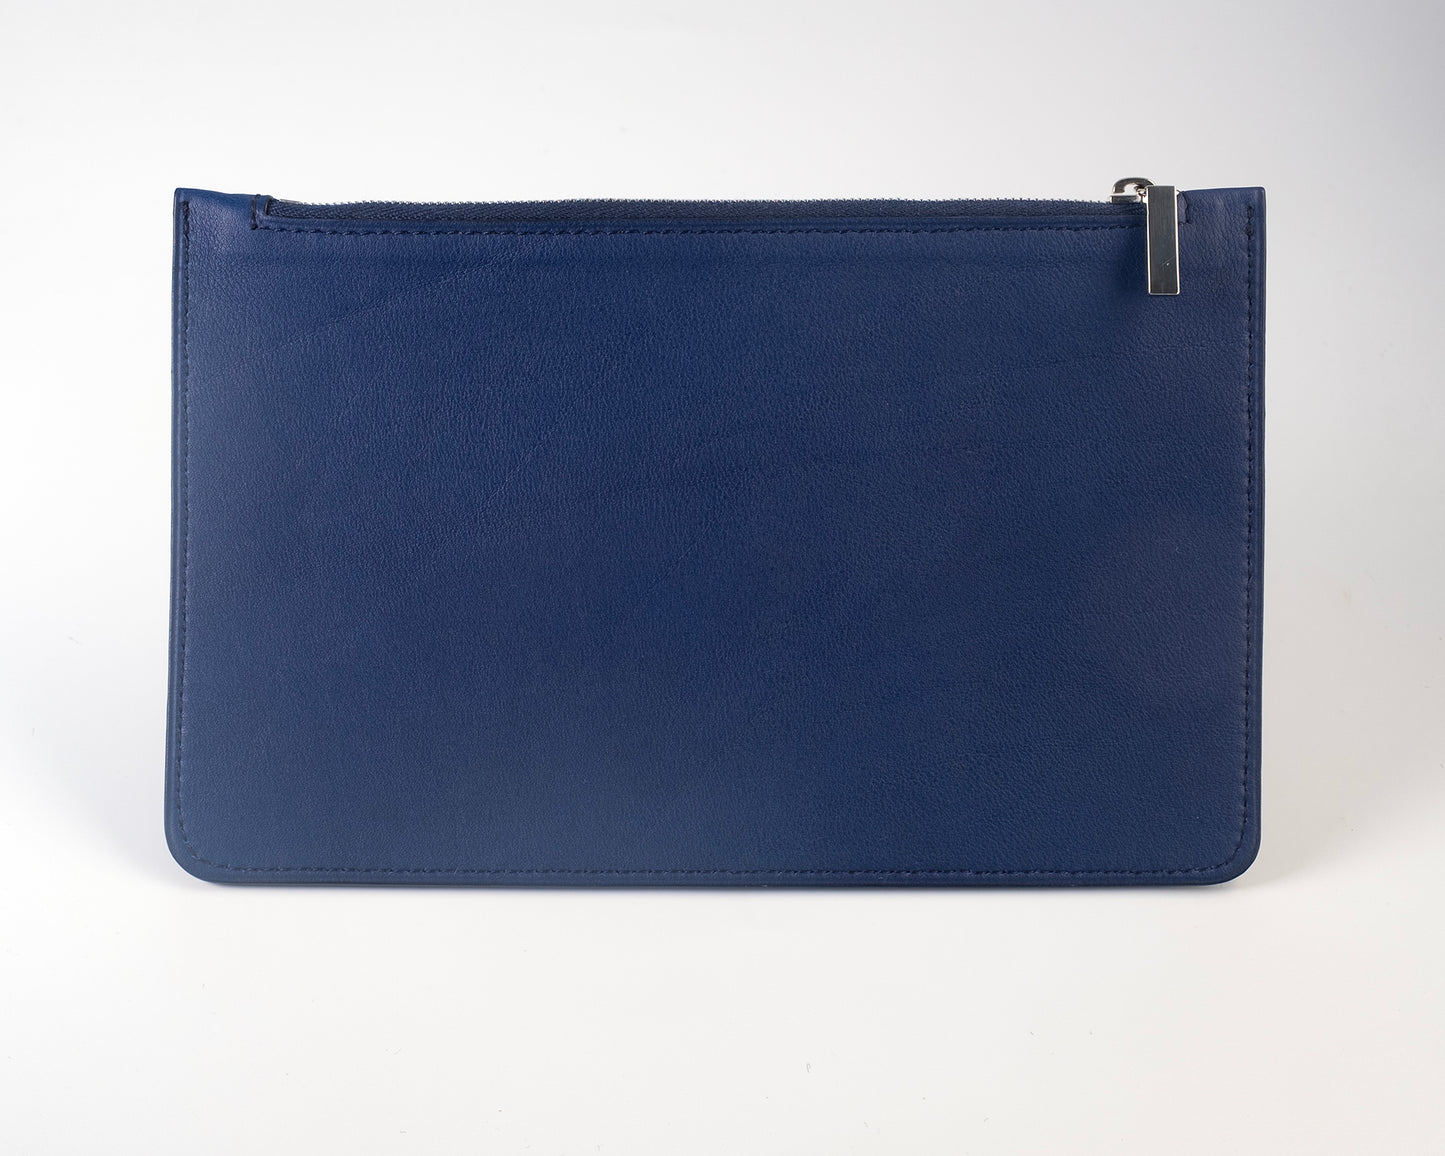 Blue leather city pouch